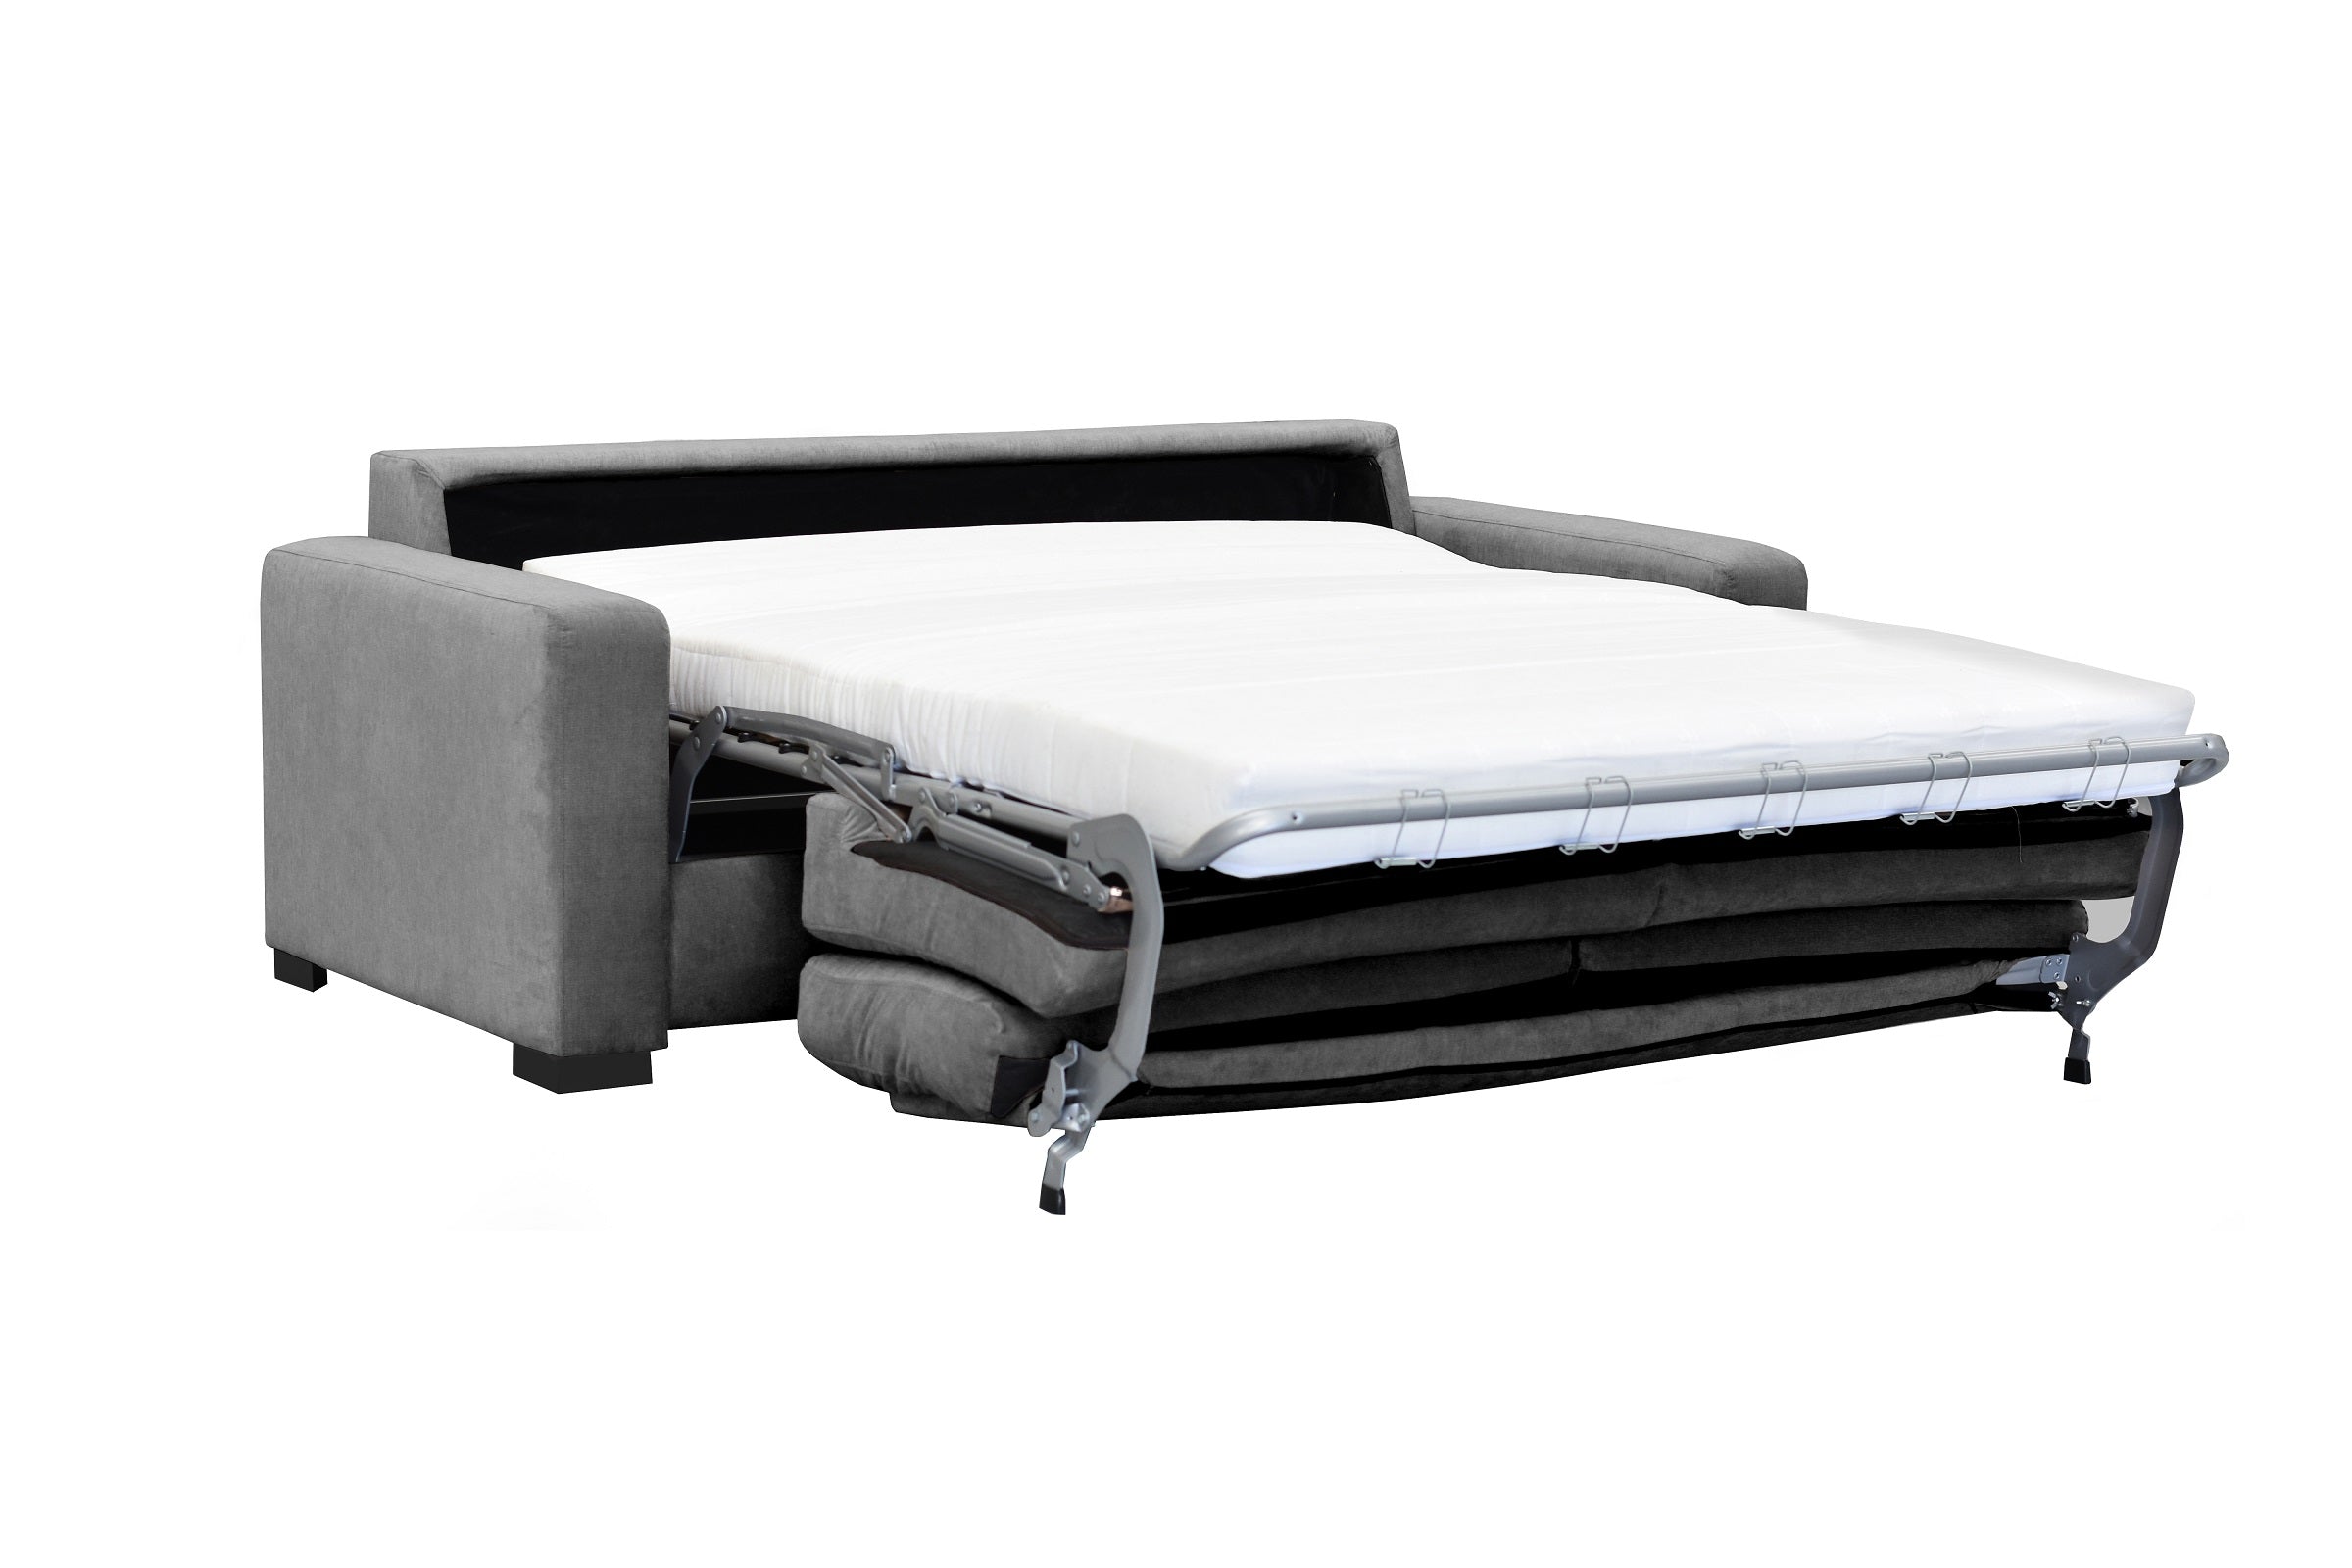 Small 2 Seater Sofa Bed With Storage Compartments - Ostend 2 - Don Baraton:  tienda de sofás, muebles y colchones